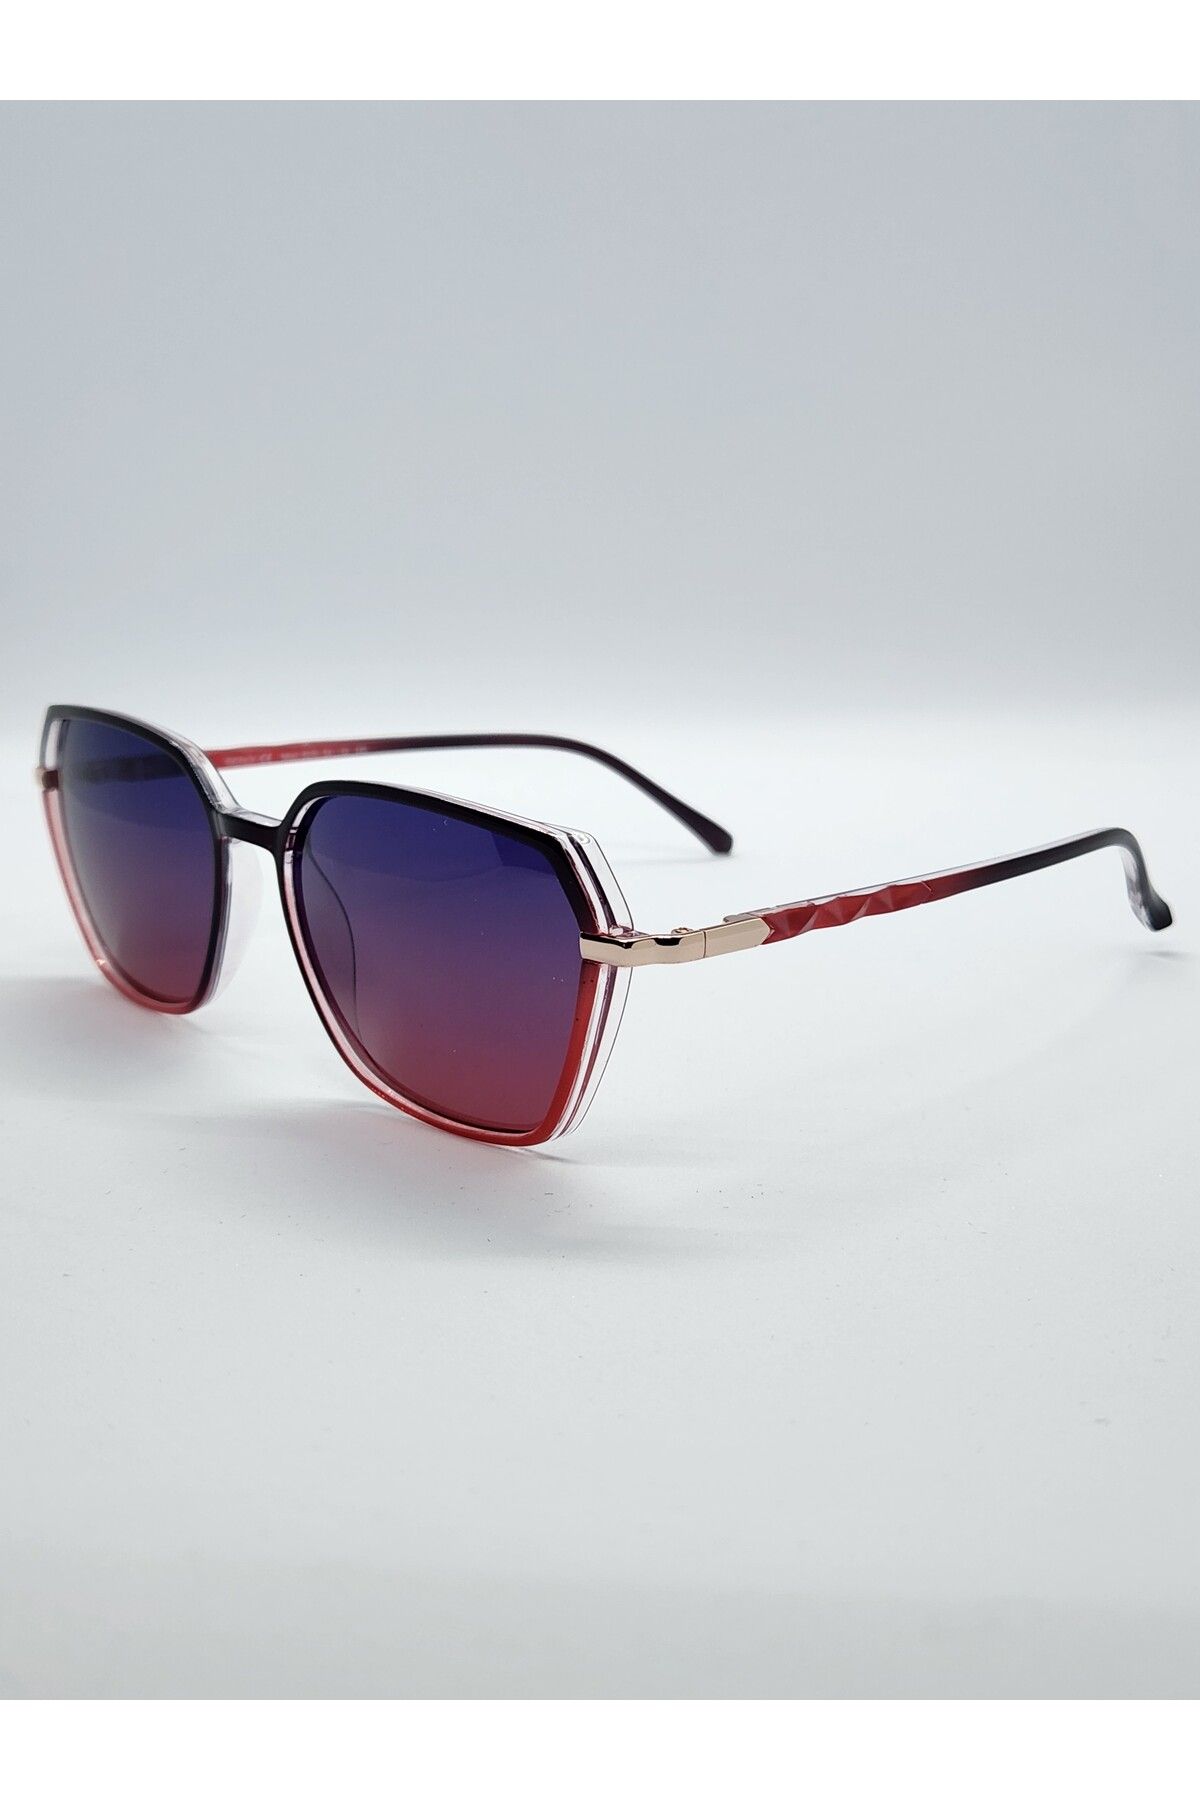 Benx Sunglasses Benx 9276 Bordo Kadın Güneş Gözlüğü